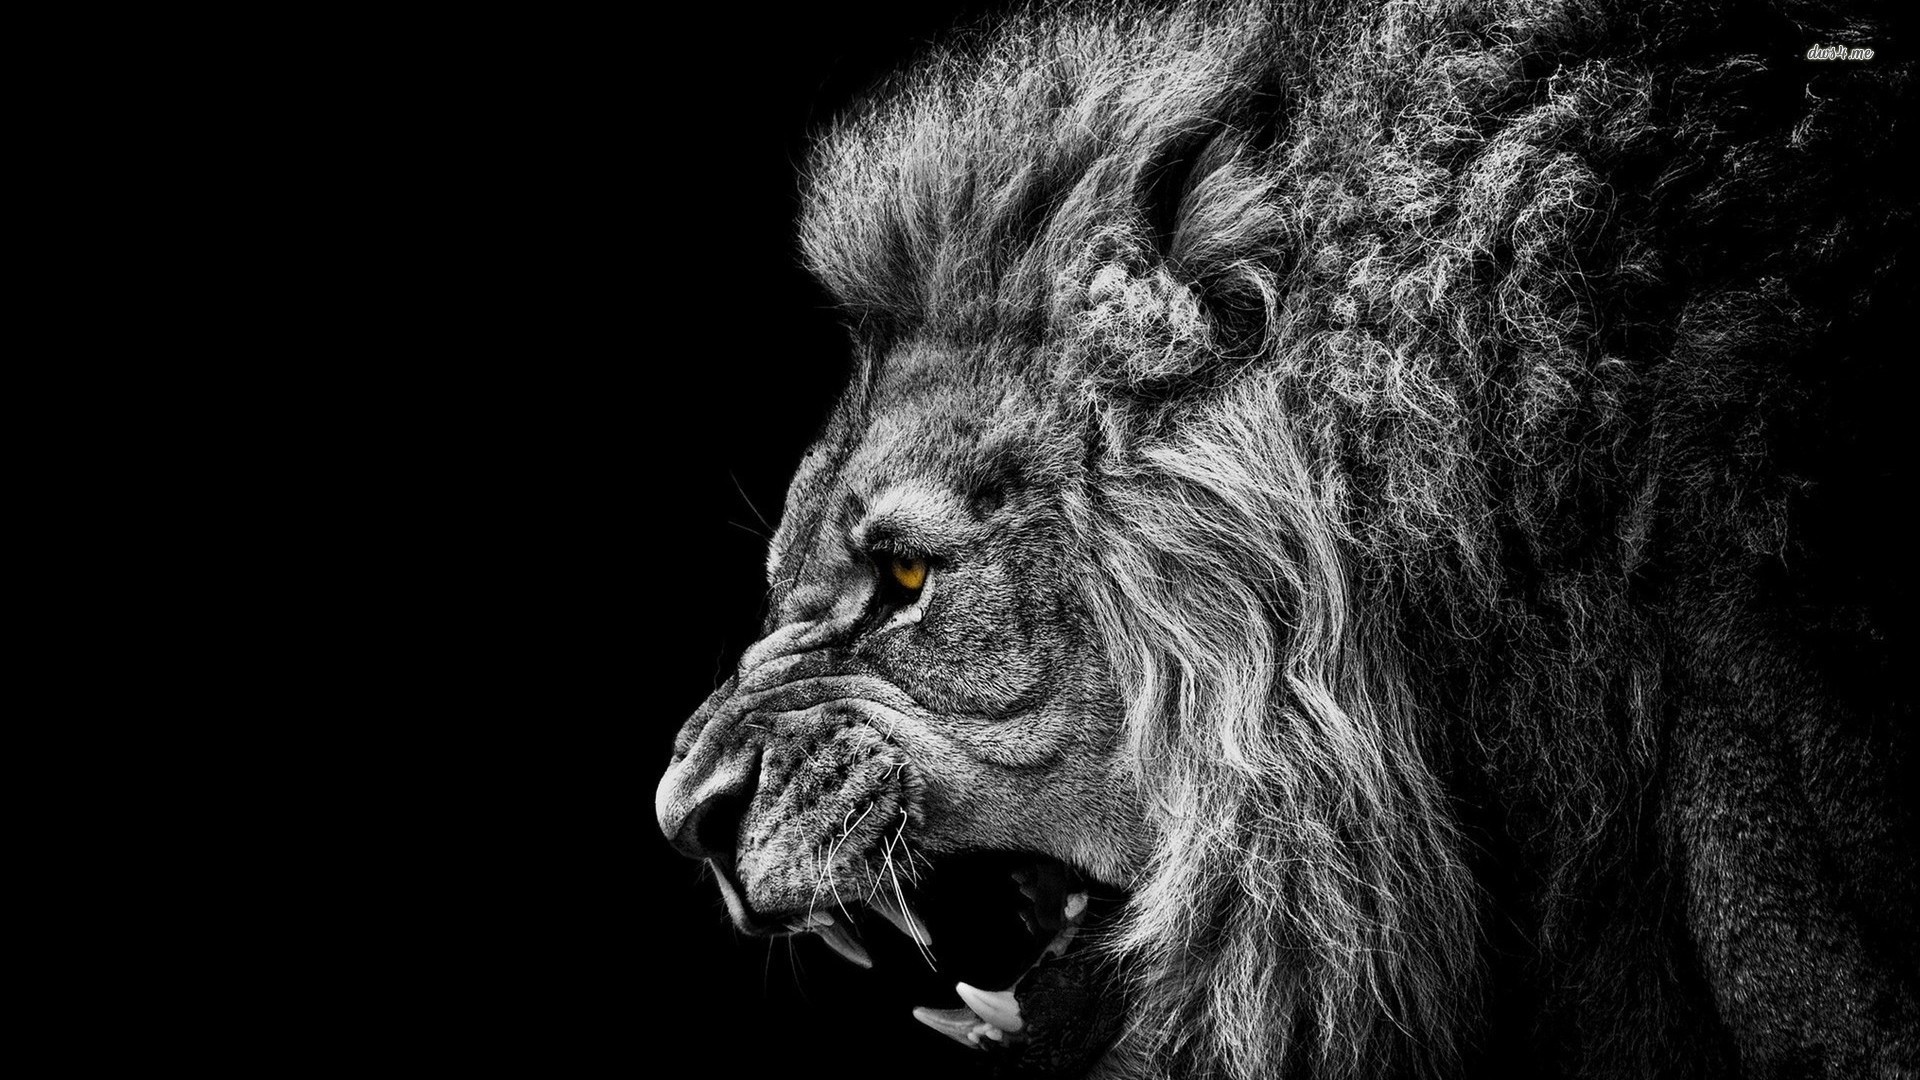 Roaring Lion Wallpaper Image